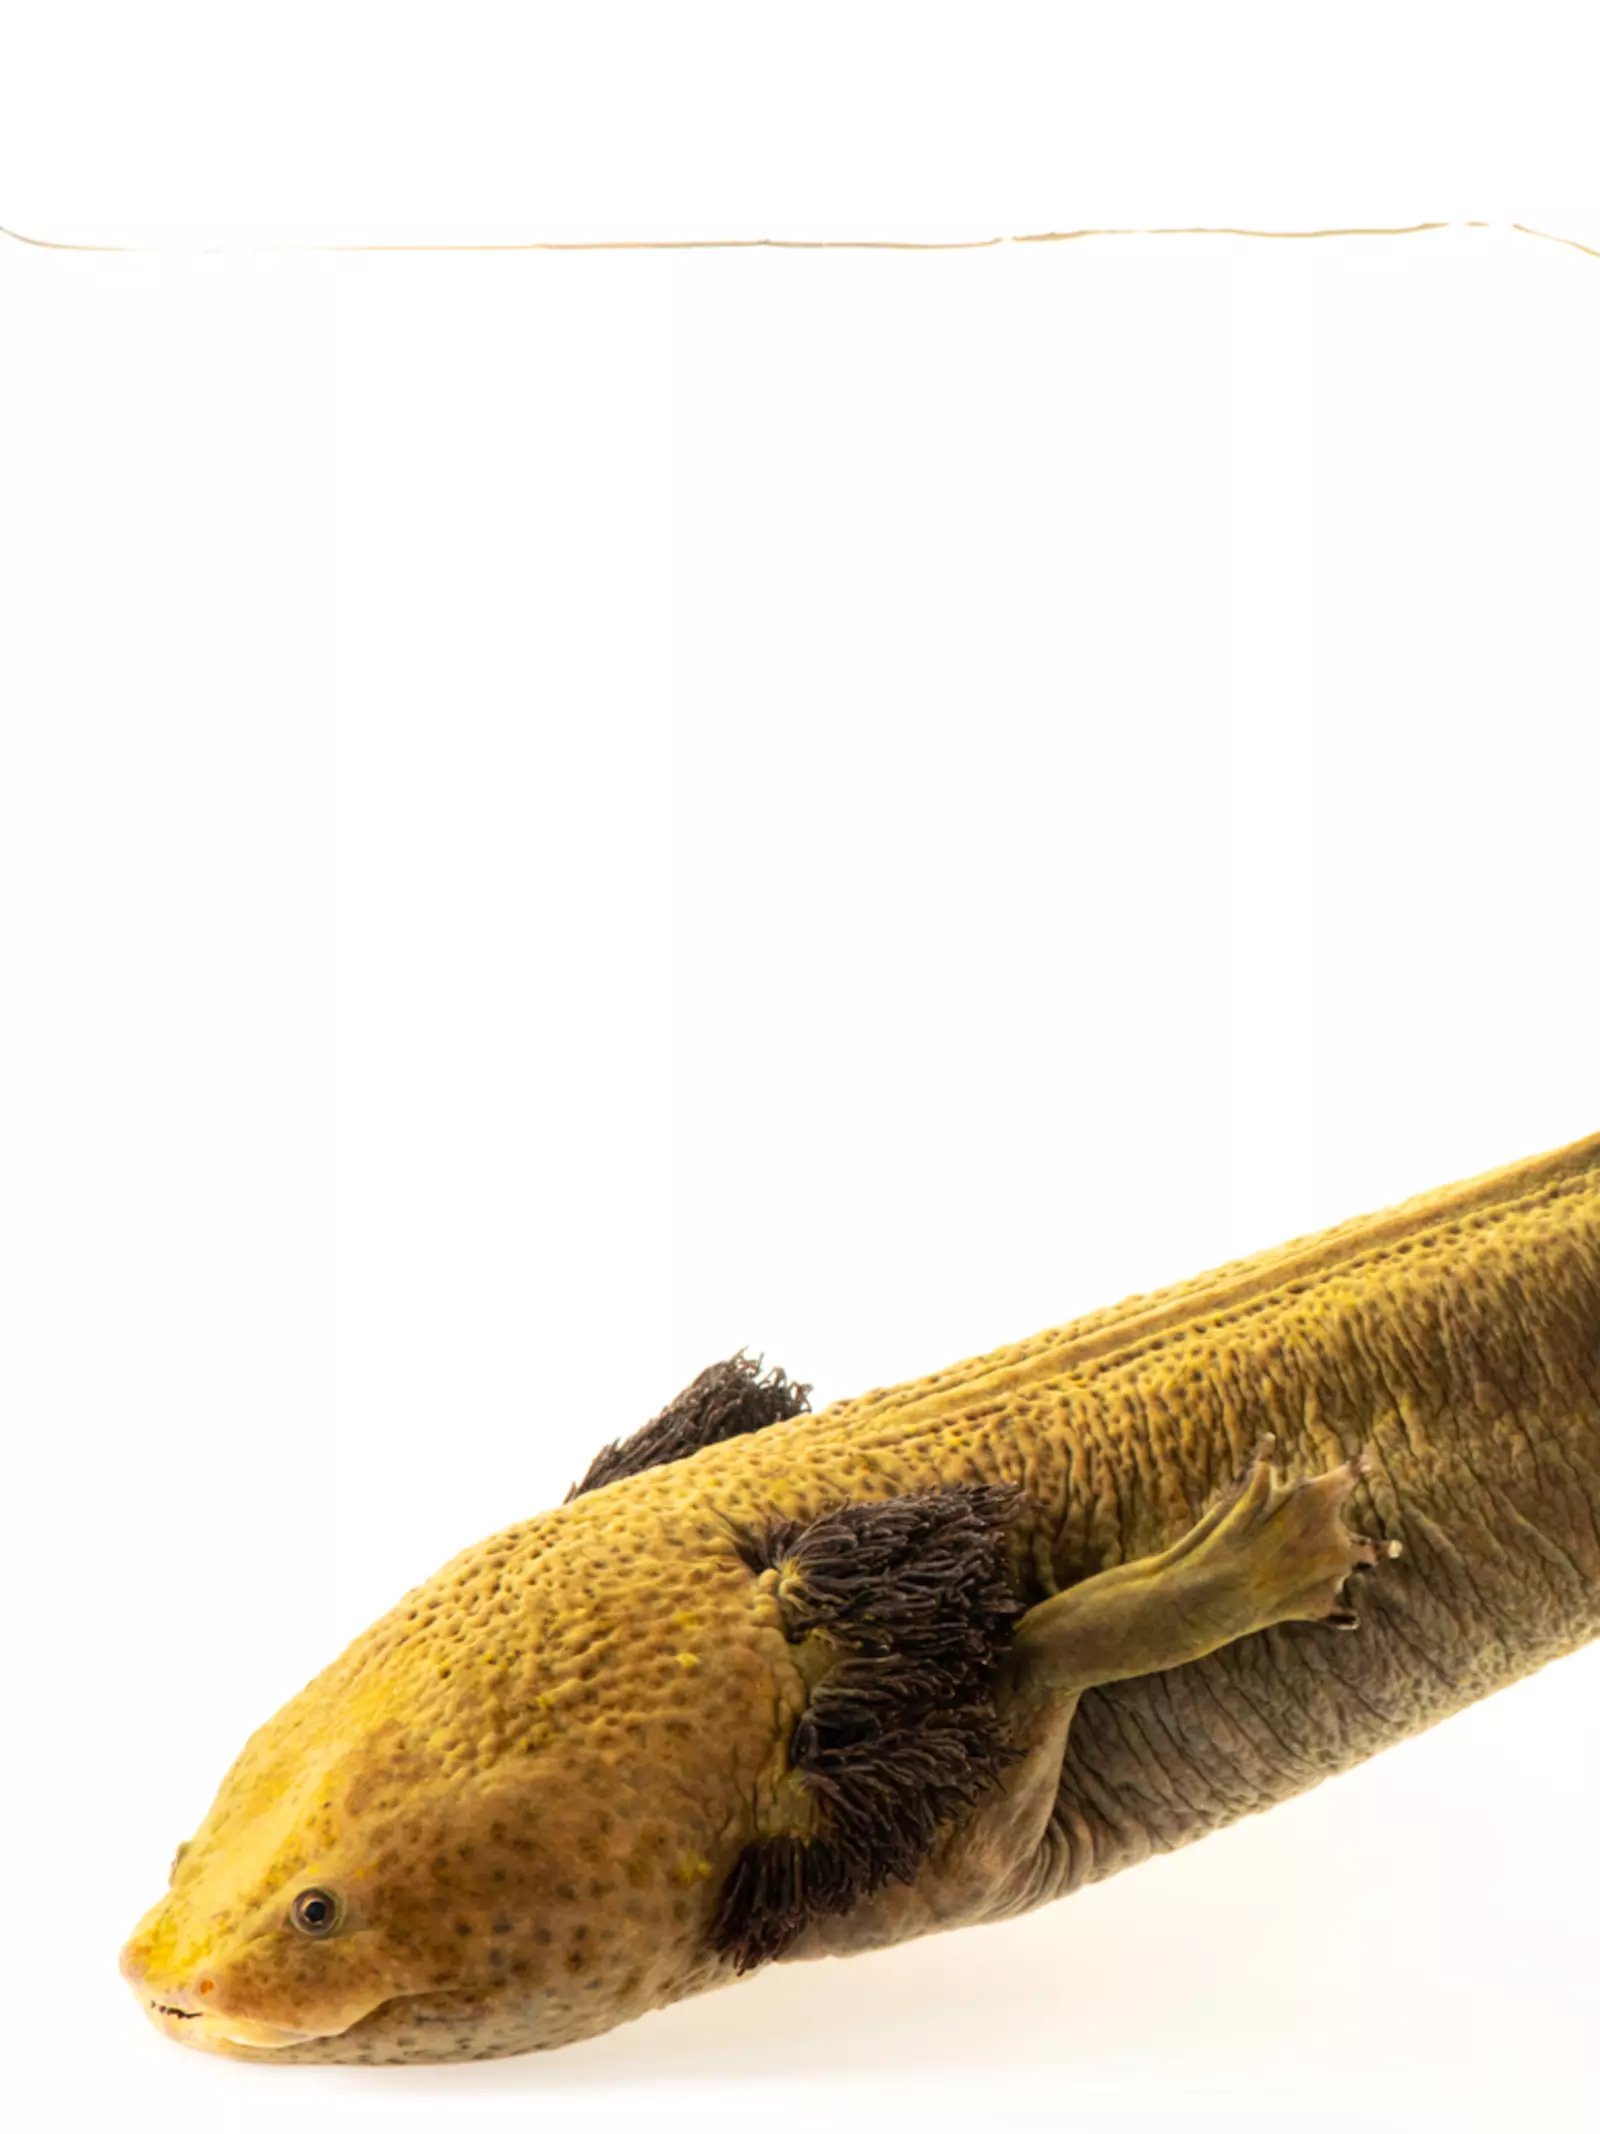 Dumeril's salamander underwater swimming with white backdrop